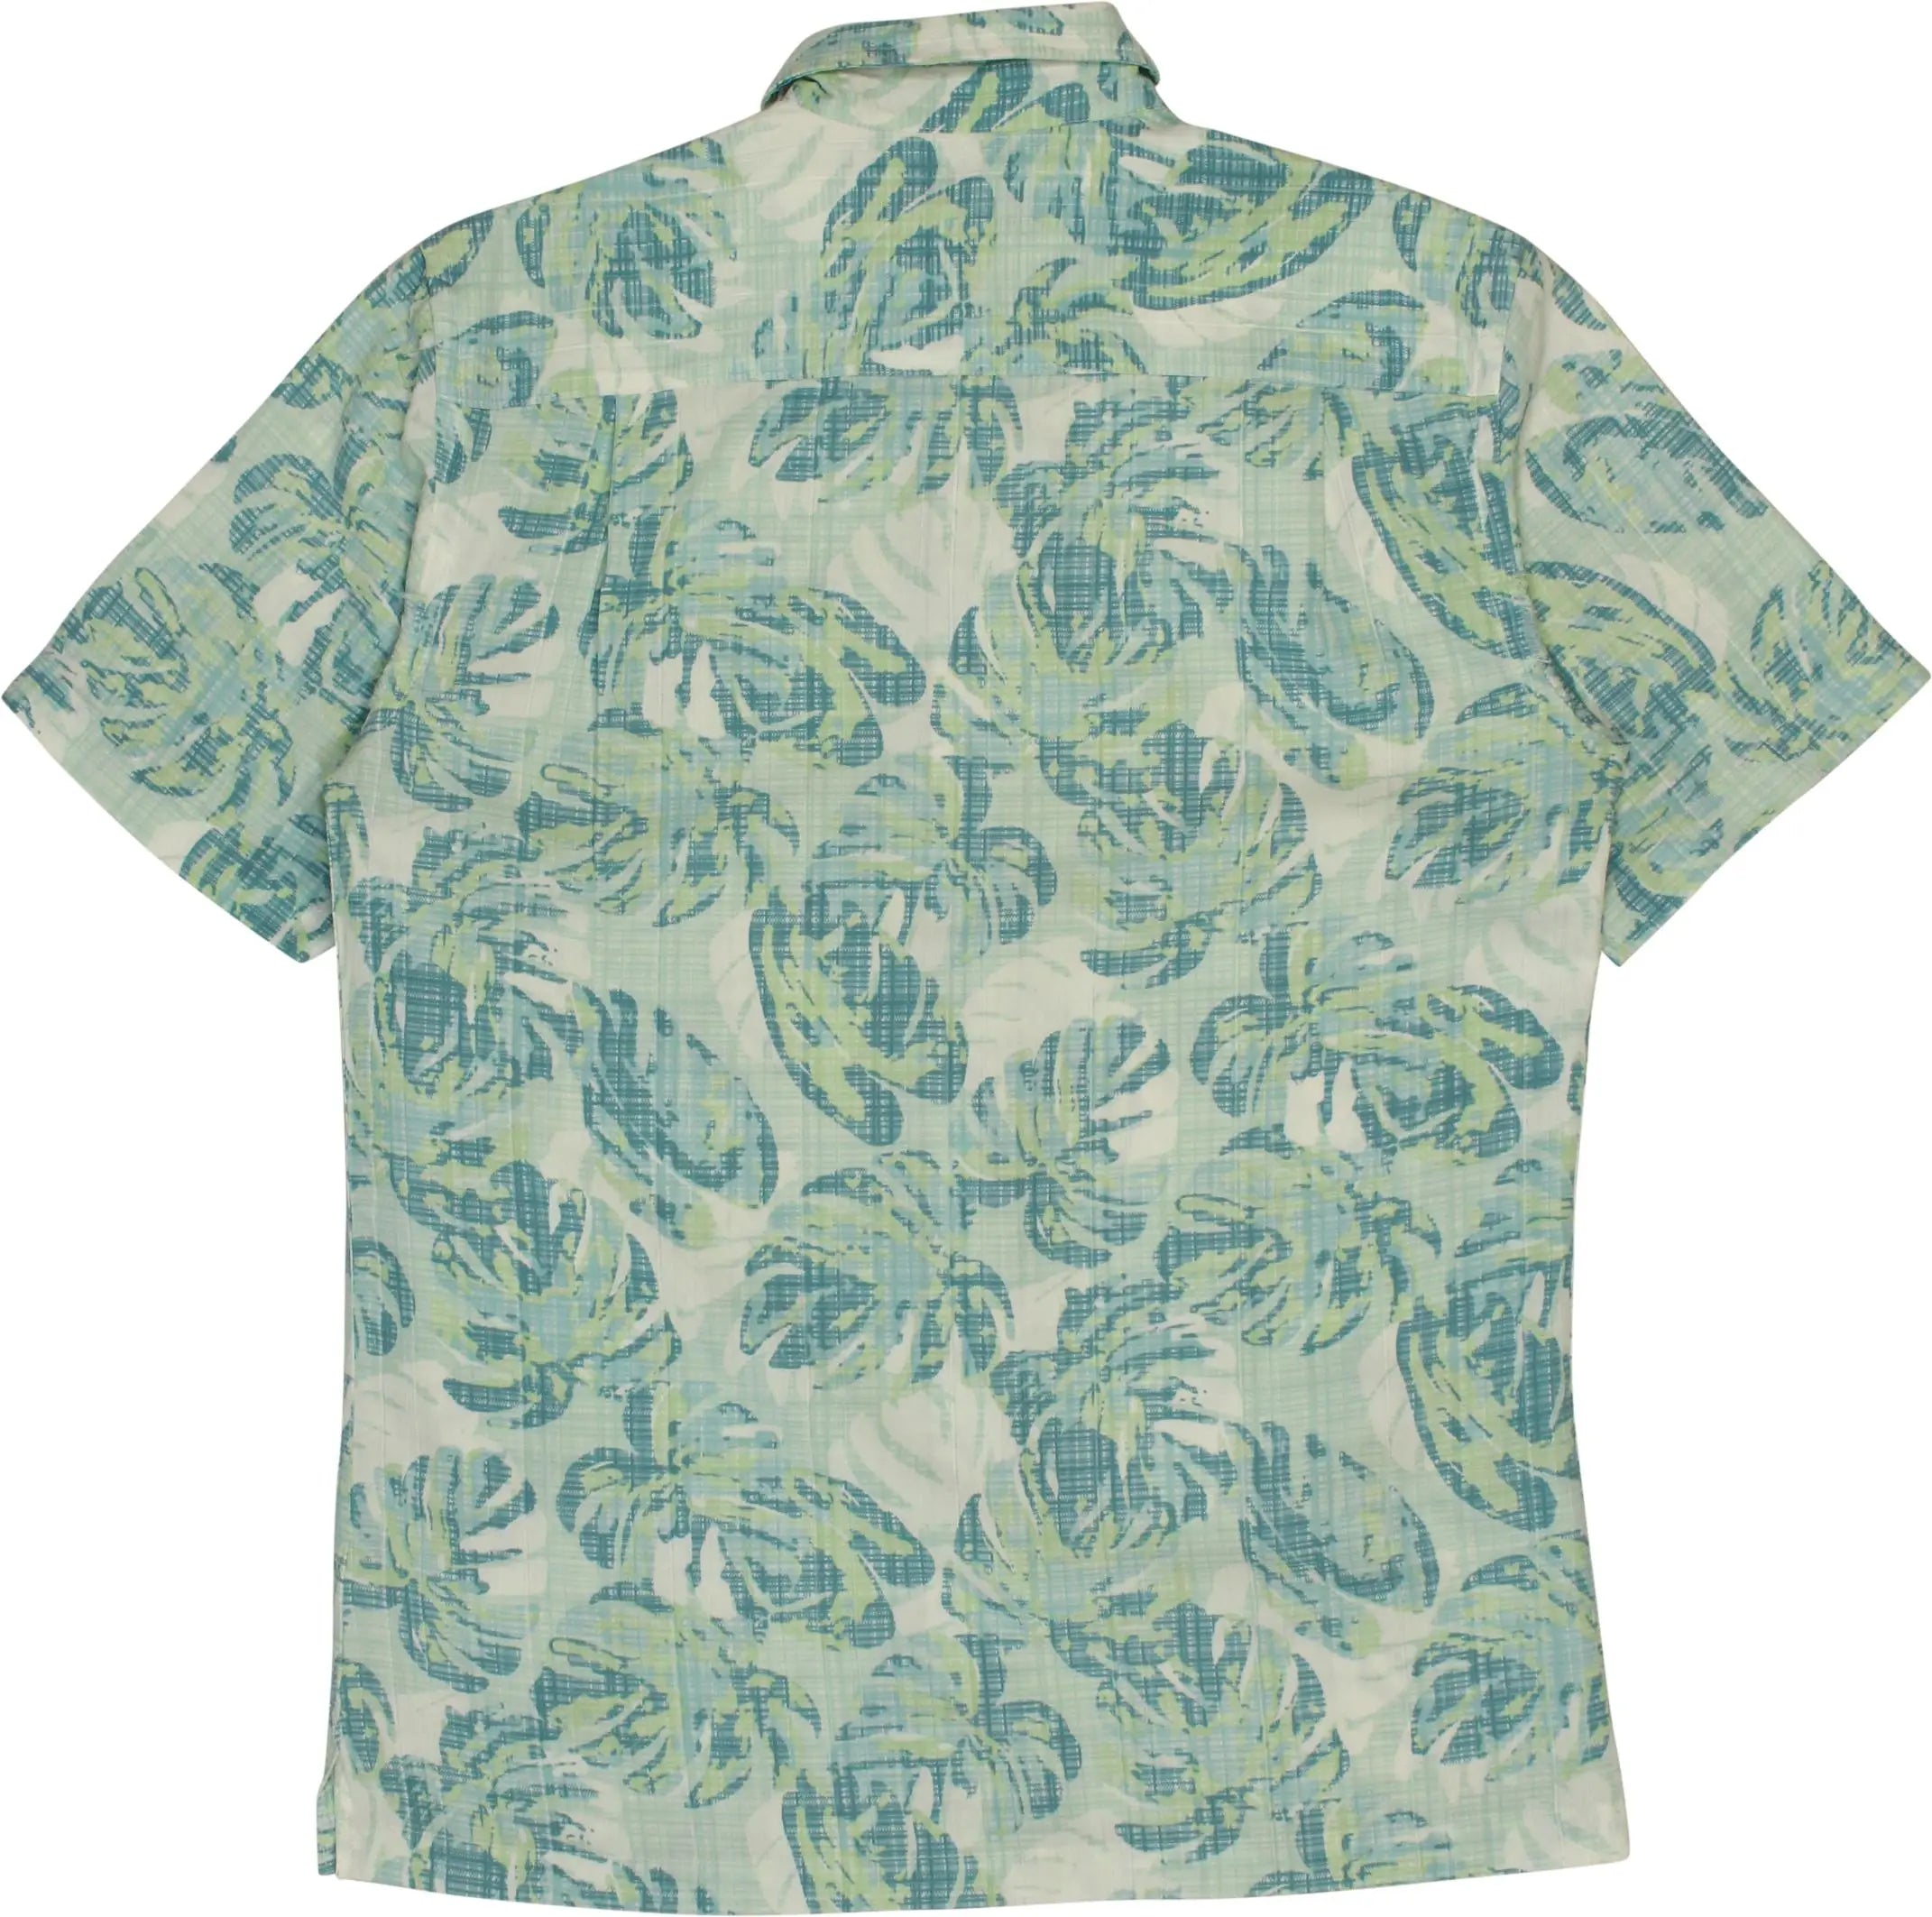 Van Heusen - Patterned Short Sleeve Shirt- ThriftTale.com - Vintage and second handclothing